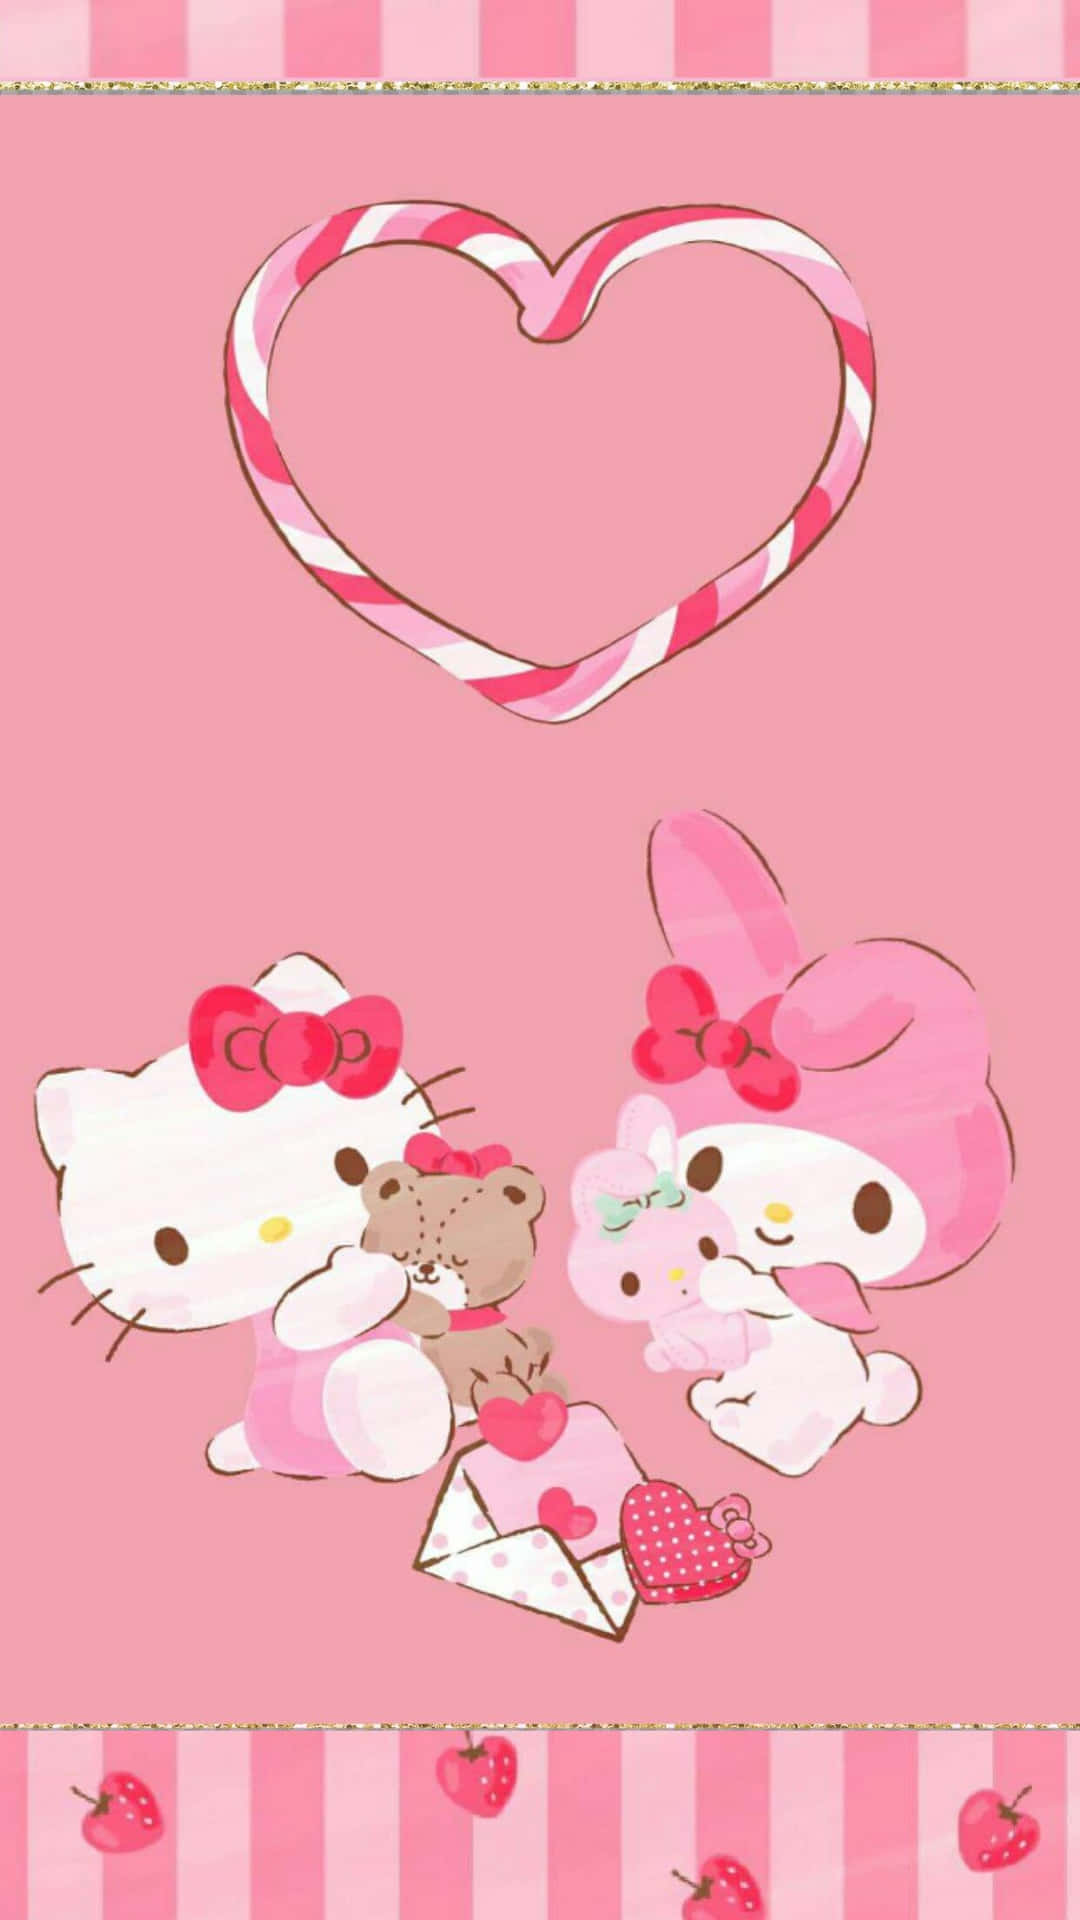 Sanrio_ Characters_ Valentines_ Celebration Wallpaper